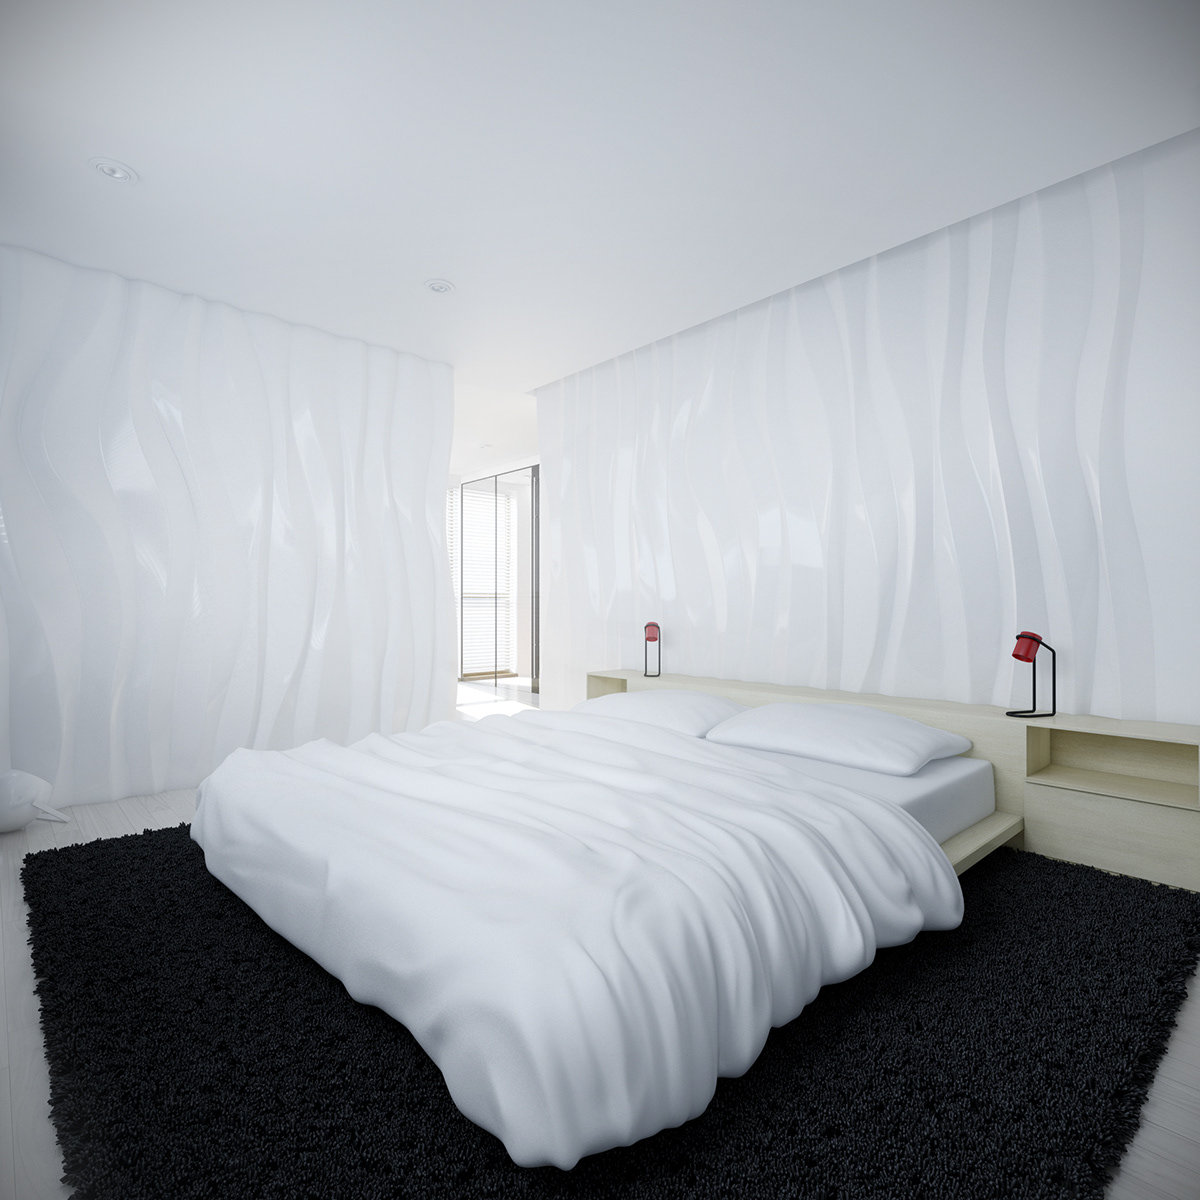 bedroom architectural visualization viz 3D